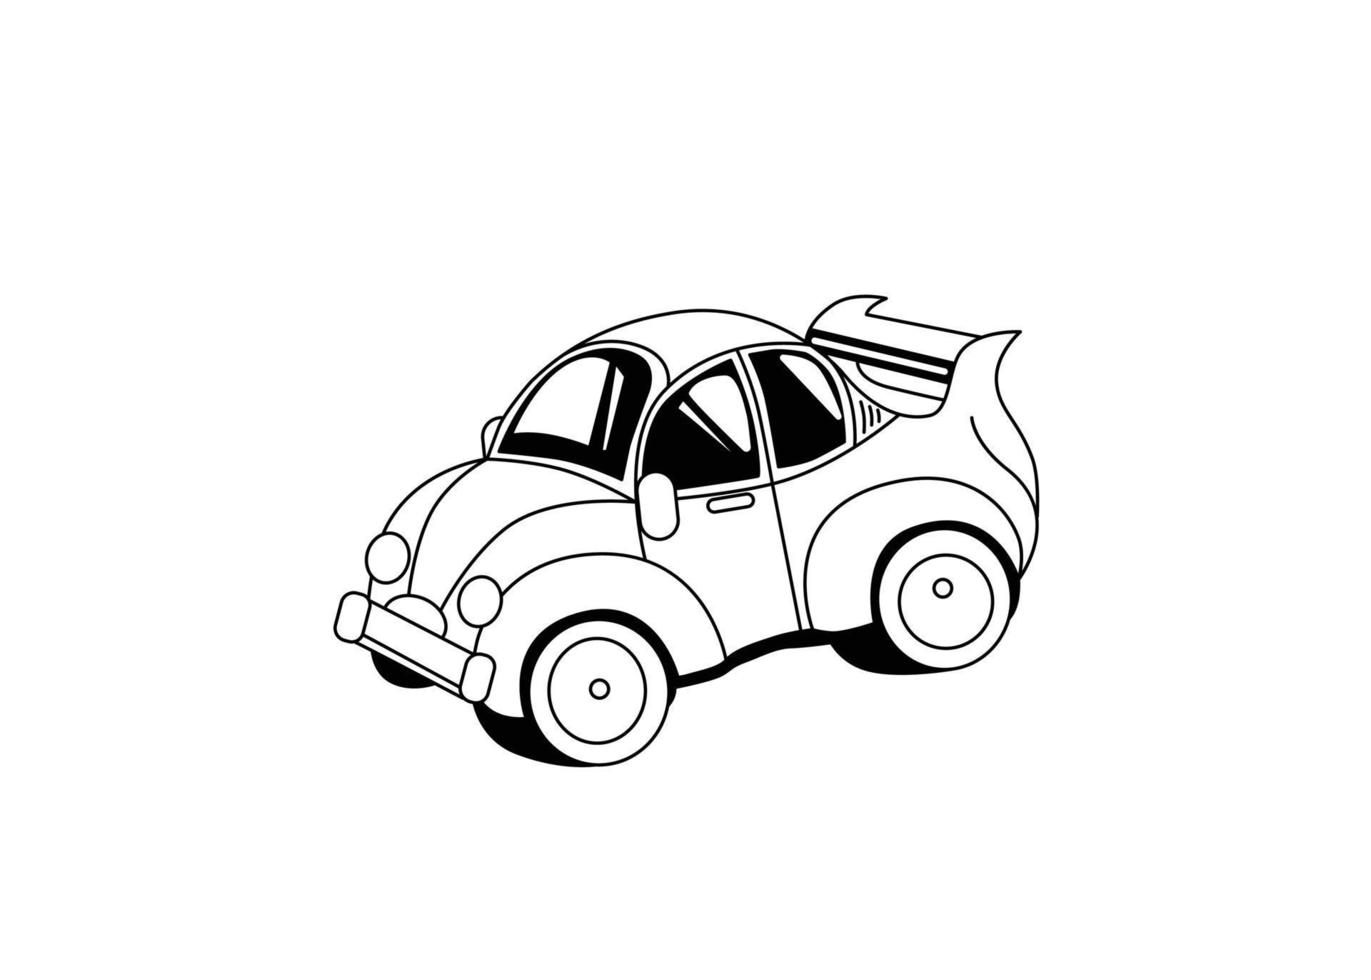 design vector, factor of outline illustration of a cartoon car vector